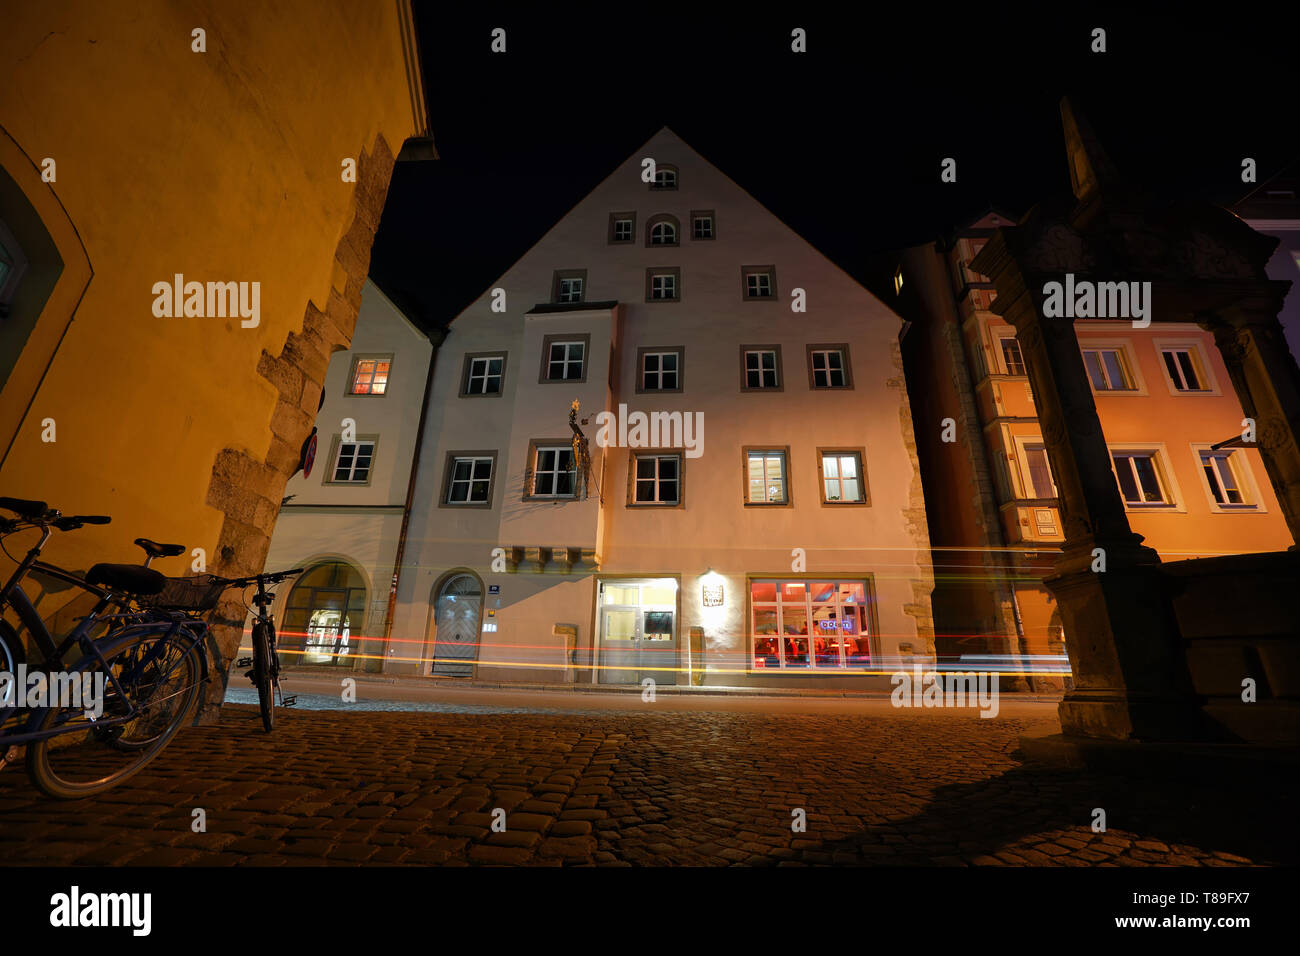 Goldene-Bären-Straße at night; view from Am Wiedfang.  Regensburg, Germany Stock Photo